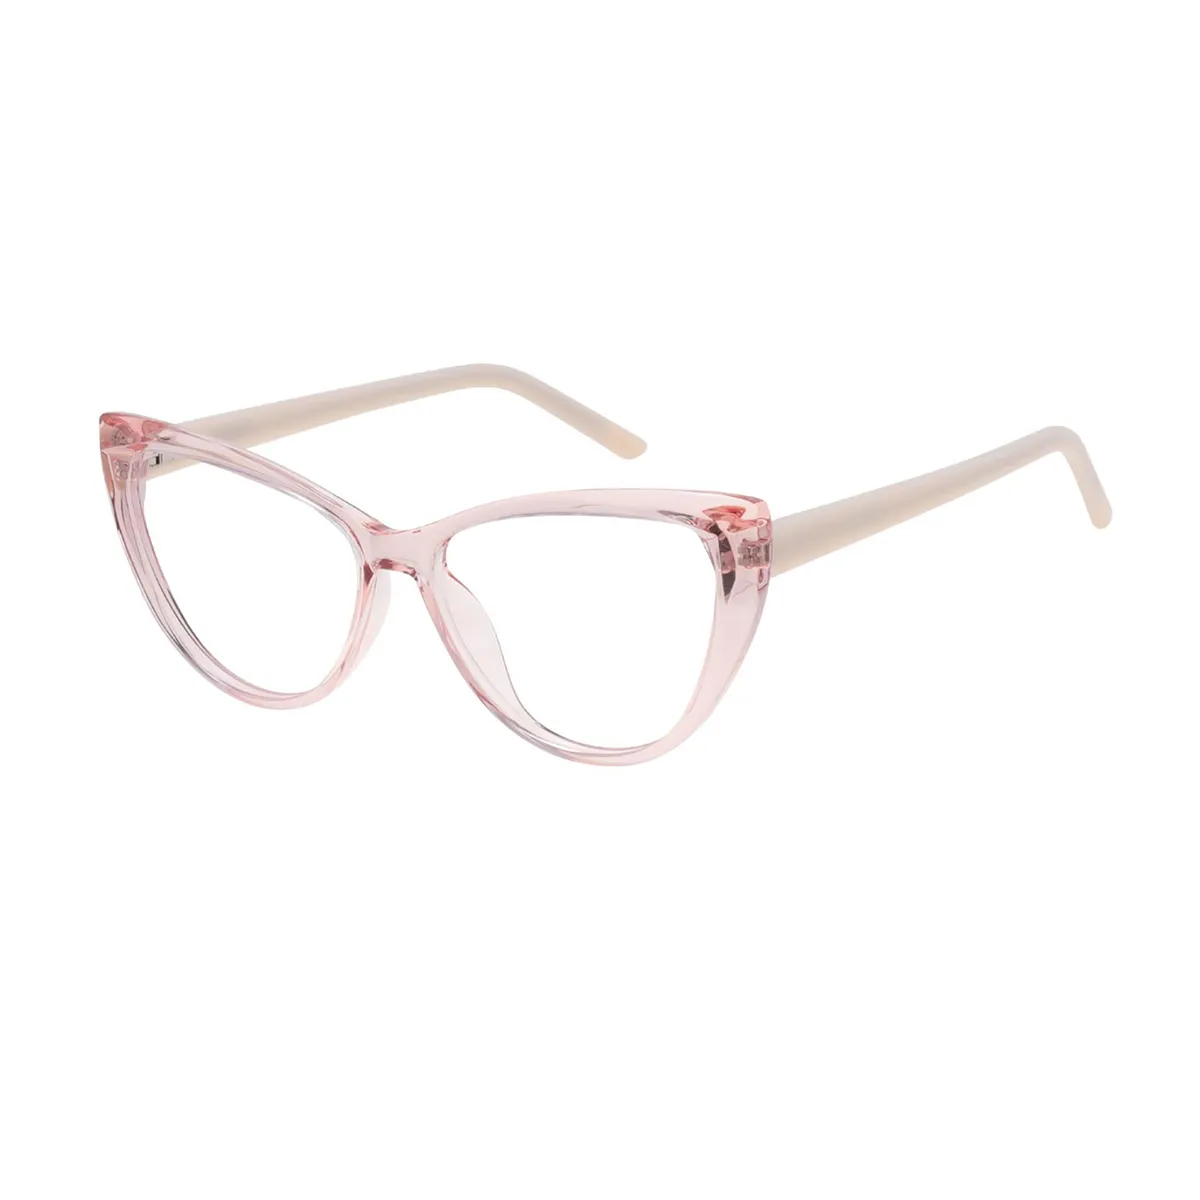 Ayer - Cat-eye Transparent-pink Glasses for Women